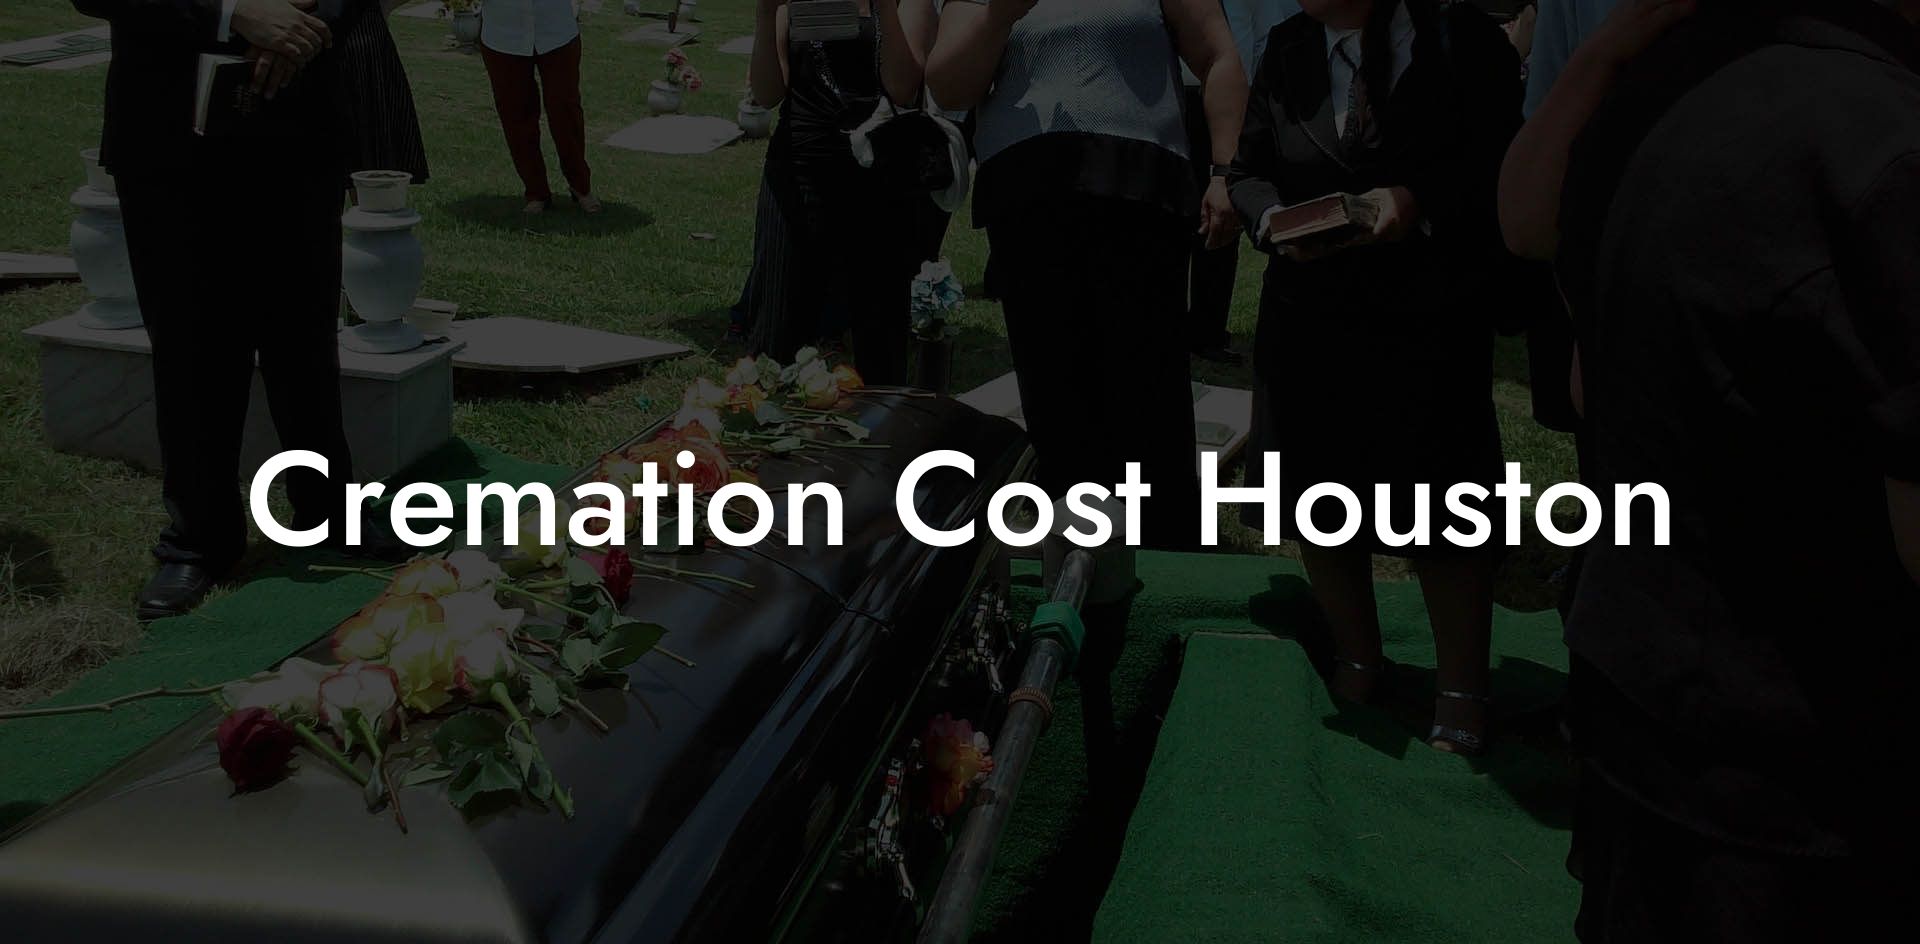 Cremation Cost Houston